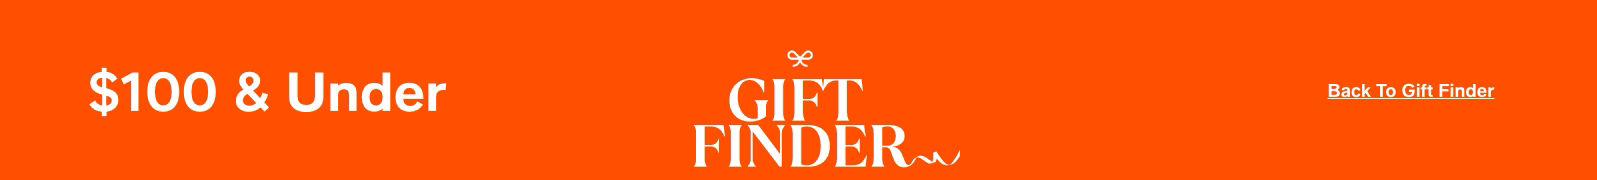 $100 and Under, Gift finder